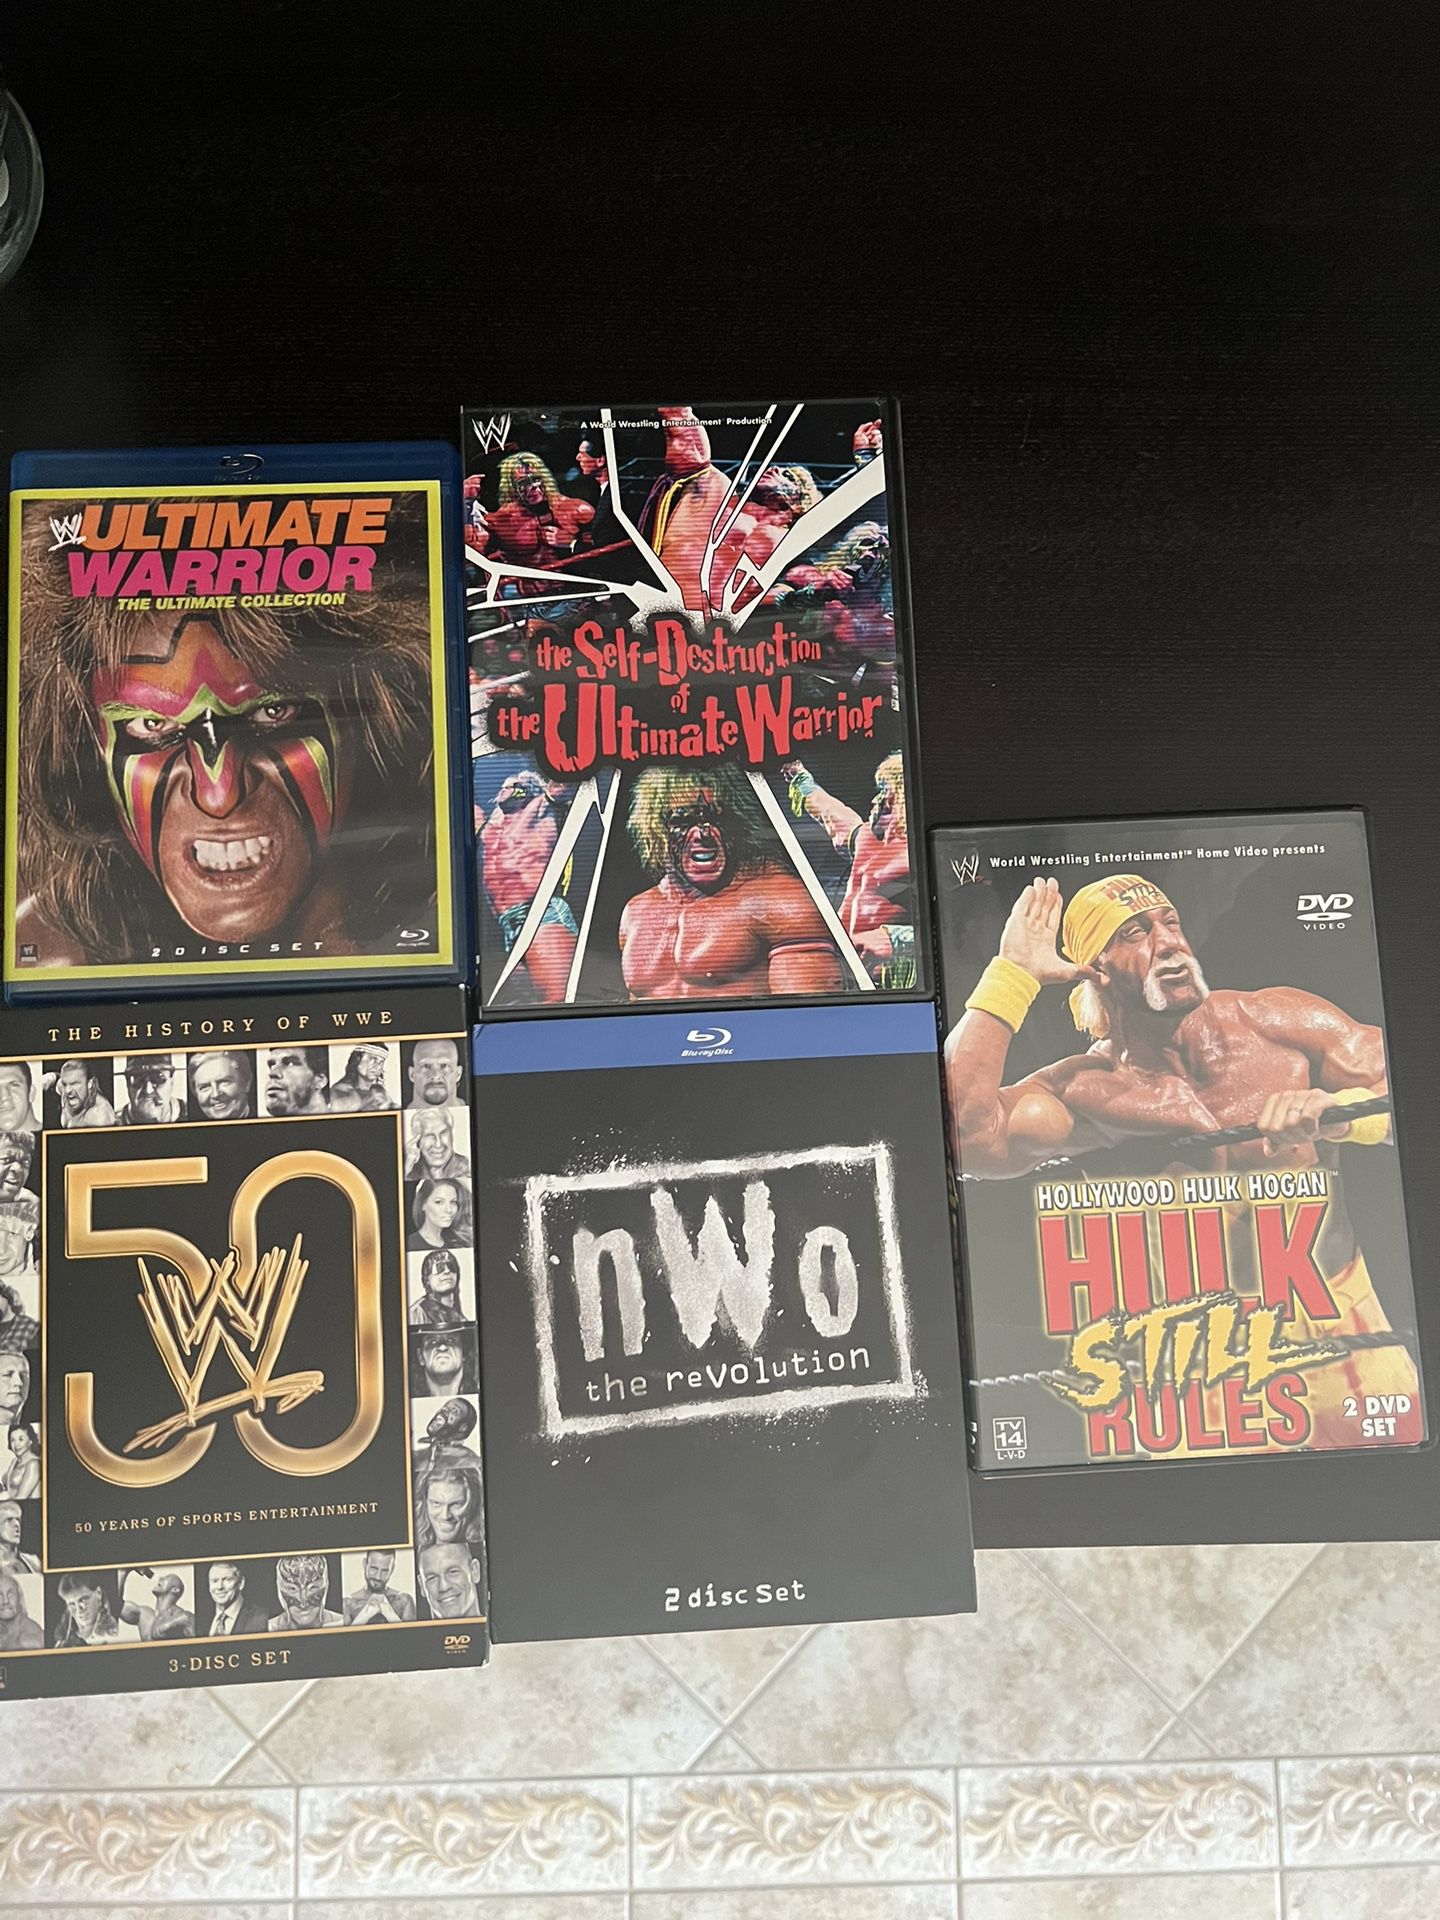 Lot of 5 WWE WWF DVD Blu ray NWO Hulk Hogan still Ultimate Warrior 50 years